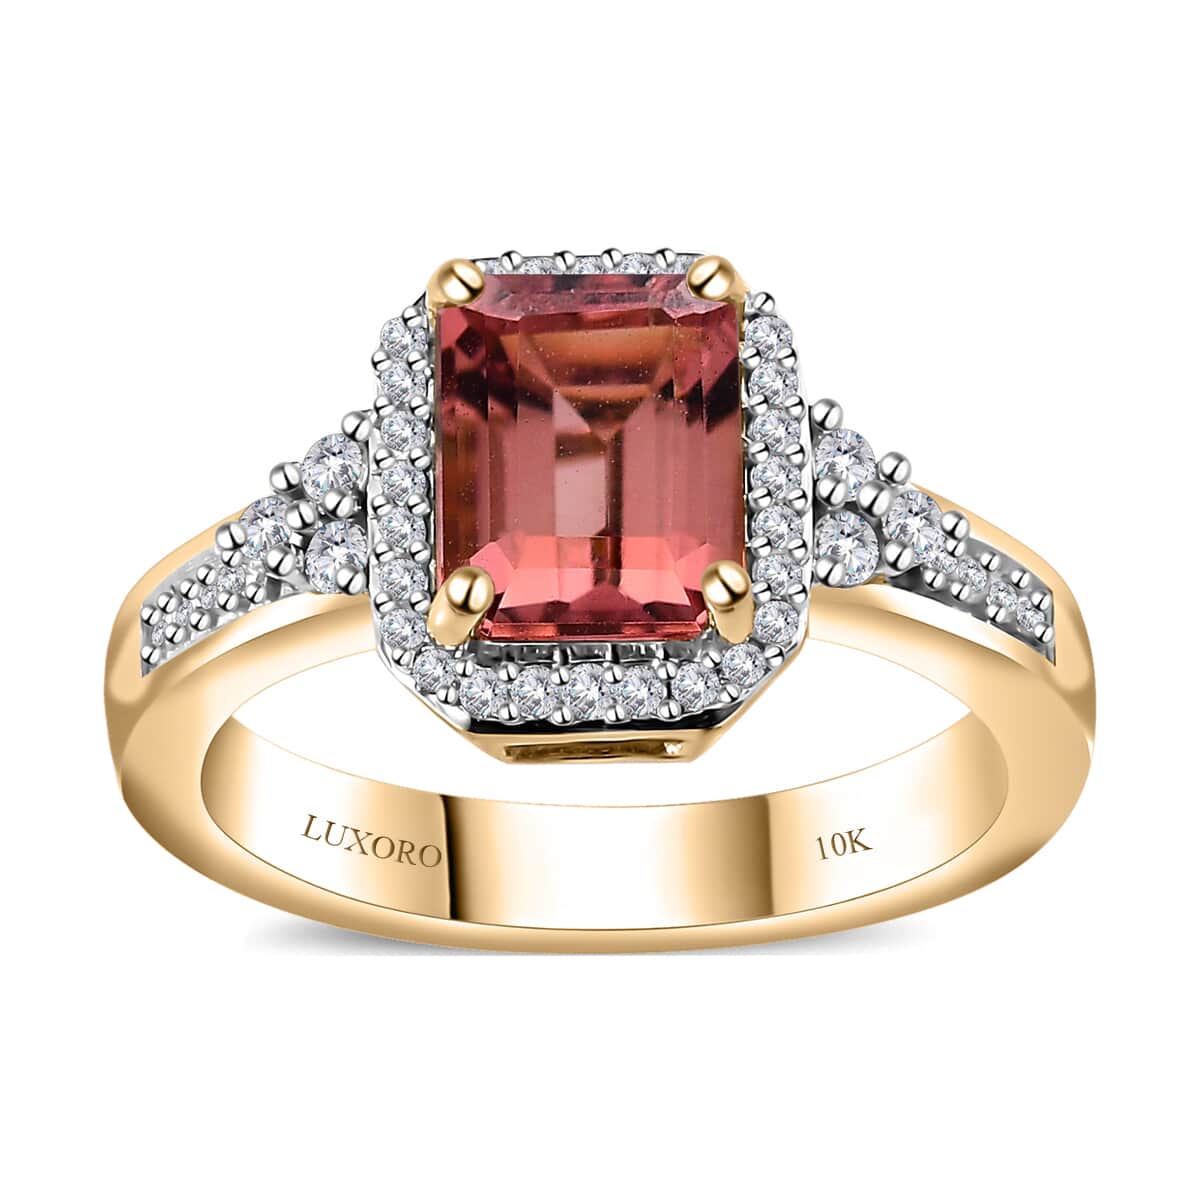 Luxoro 10K Rose Gold Premium Blush Tourmaline and G-H I2 Diamond Halo Ring (Size 6.0) 4.75 Grams 2.10 ctw image number 0